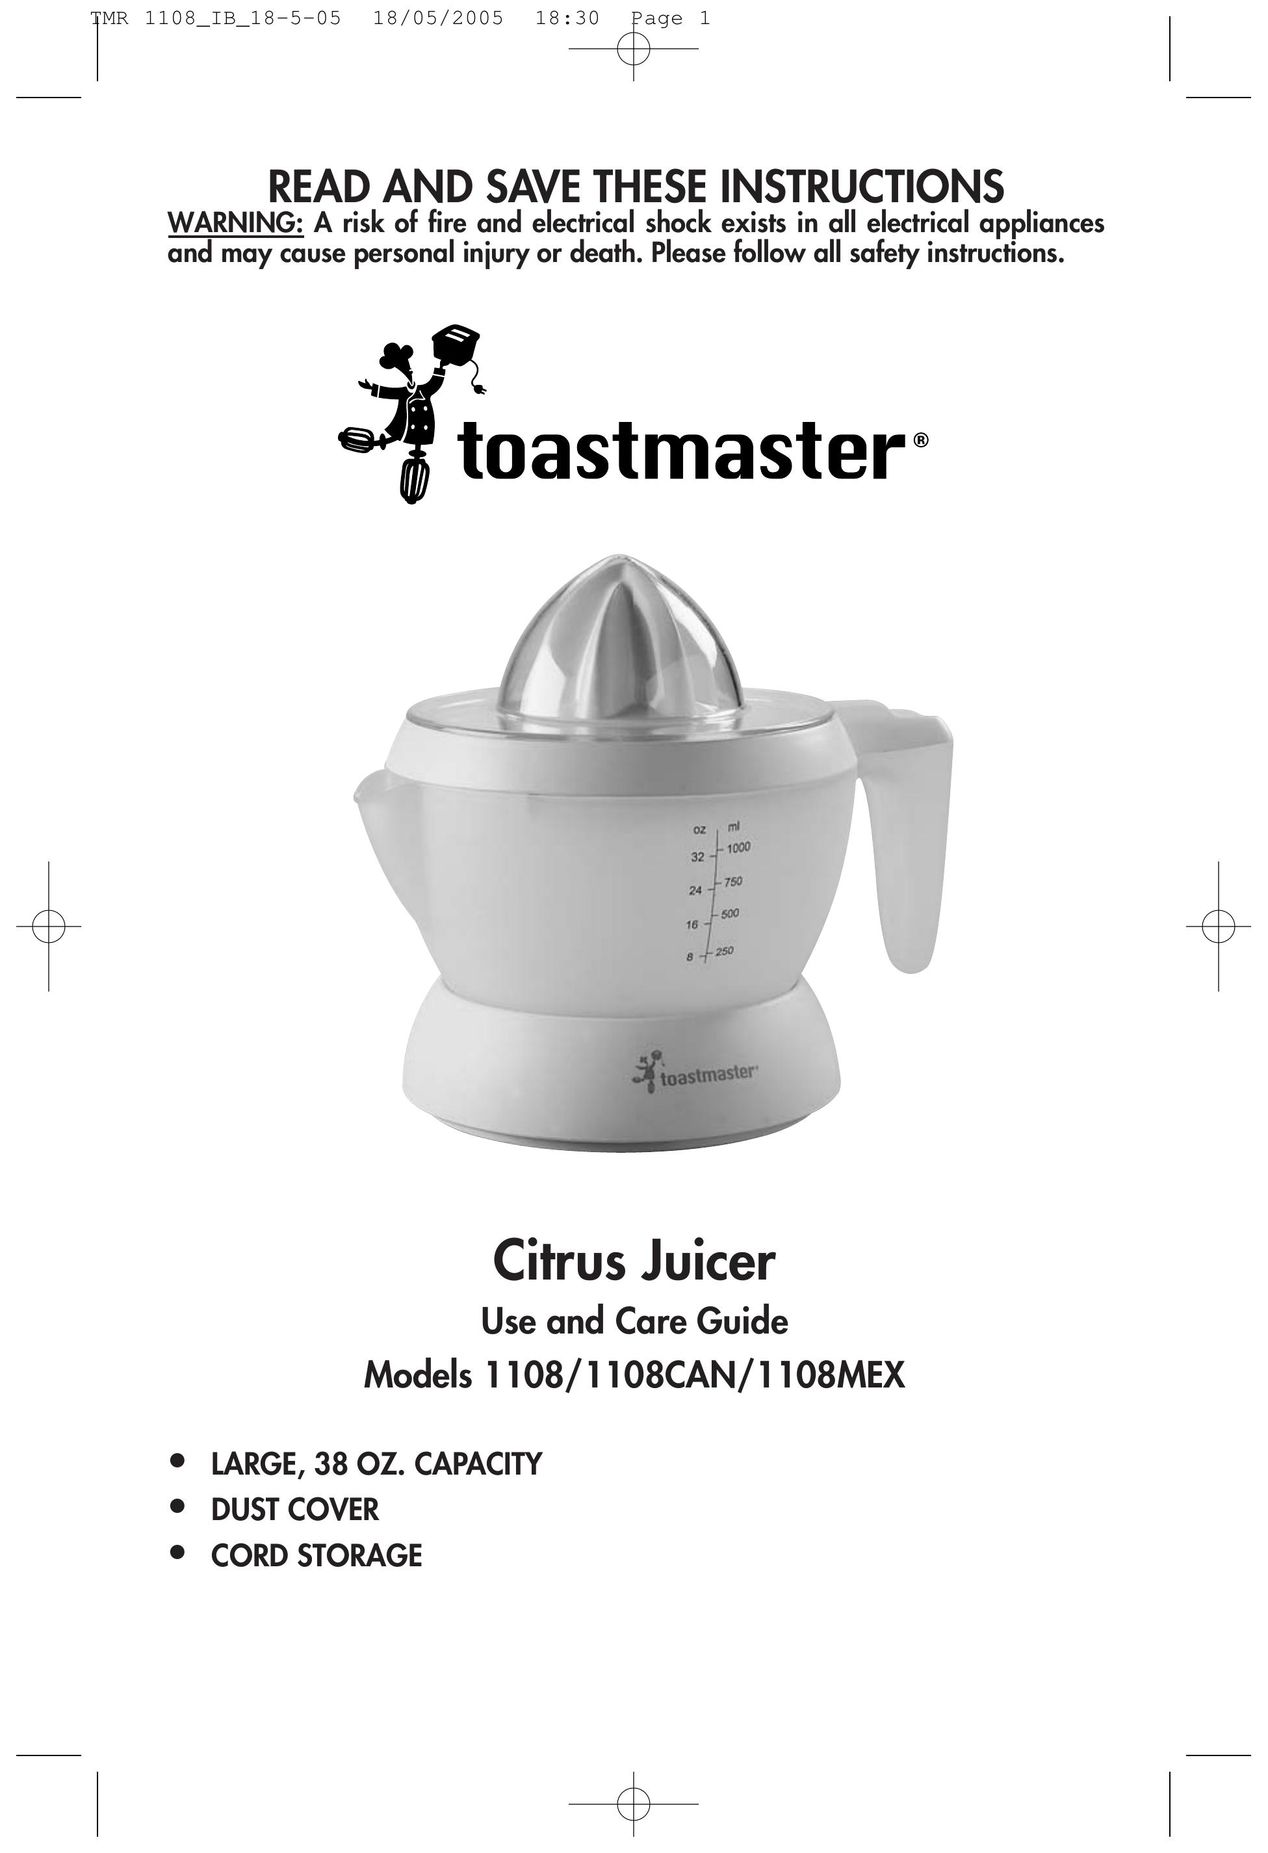 Toastmaster 1108 Juicer User Manual